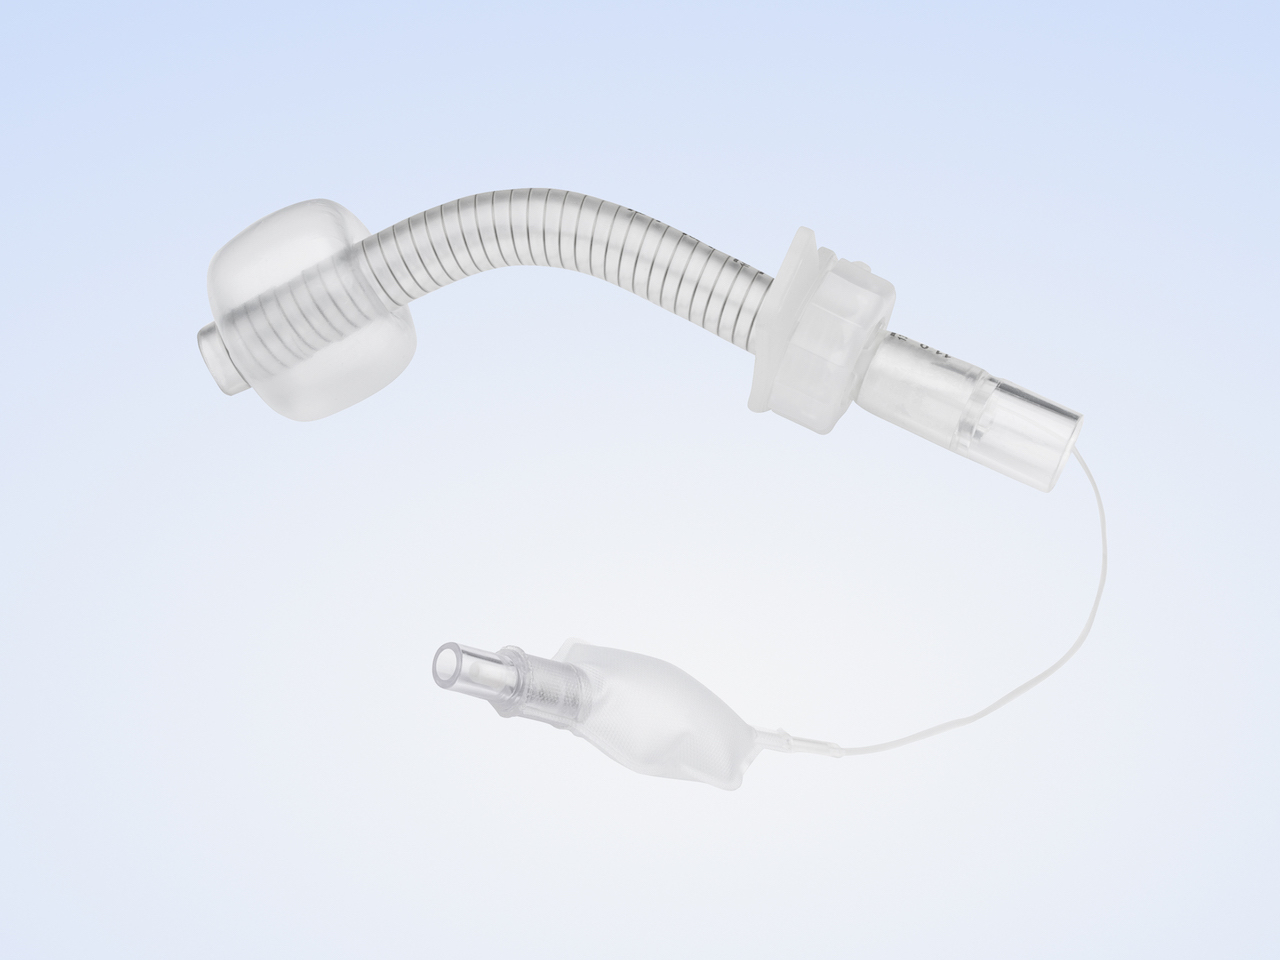 Priflex with Cuff - Spiral-reinforced tracheostomy tube